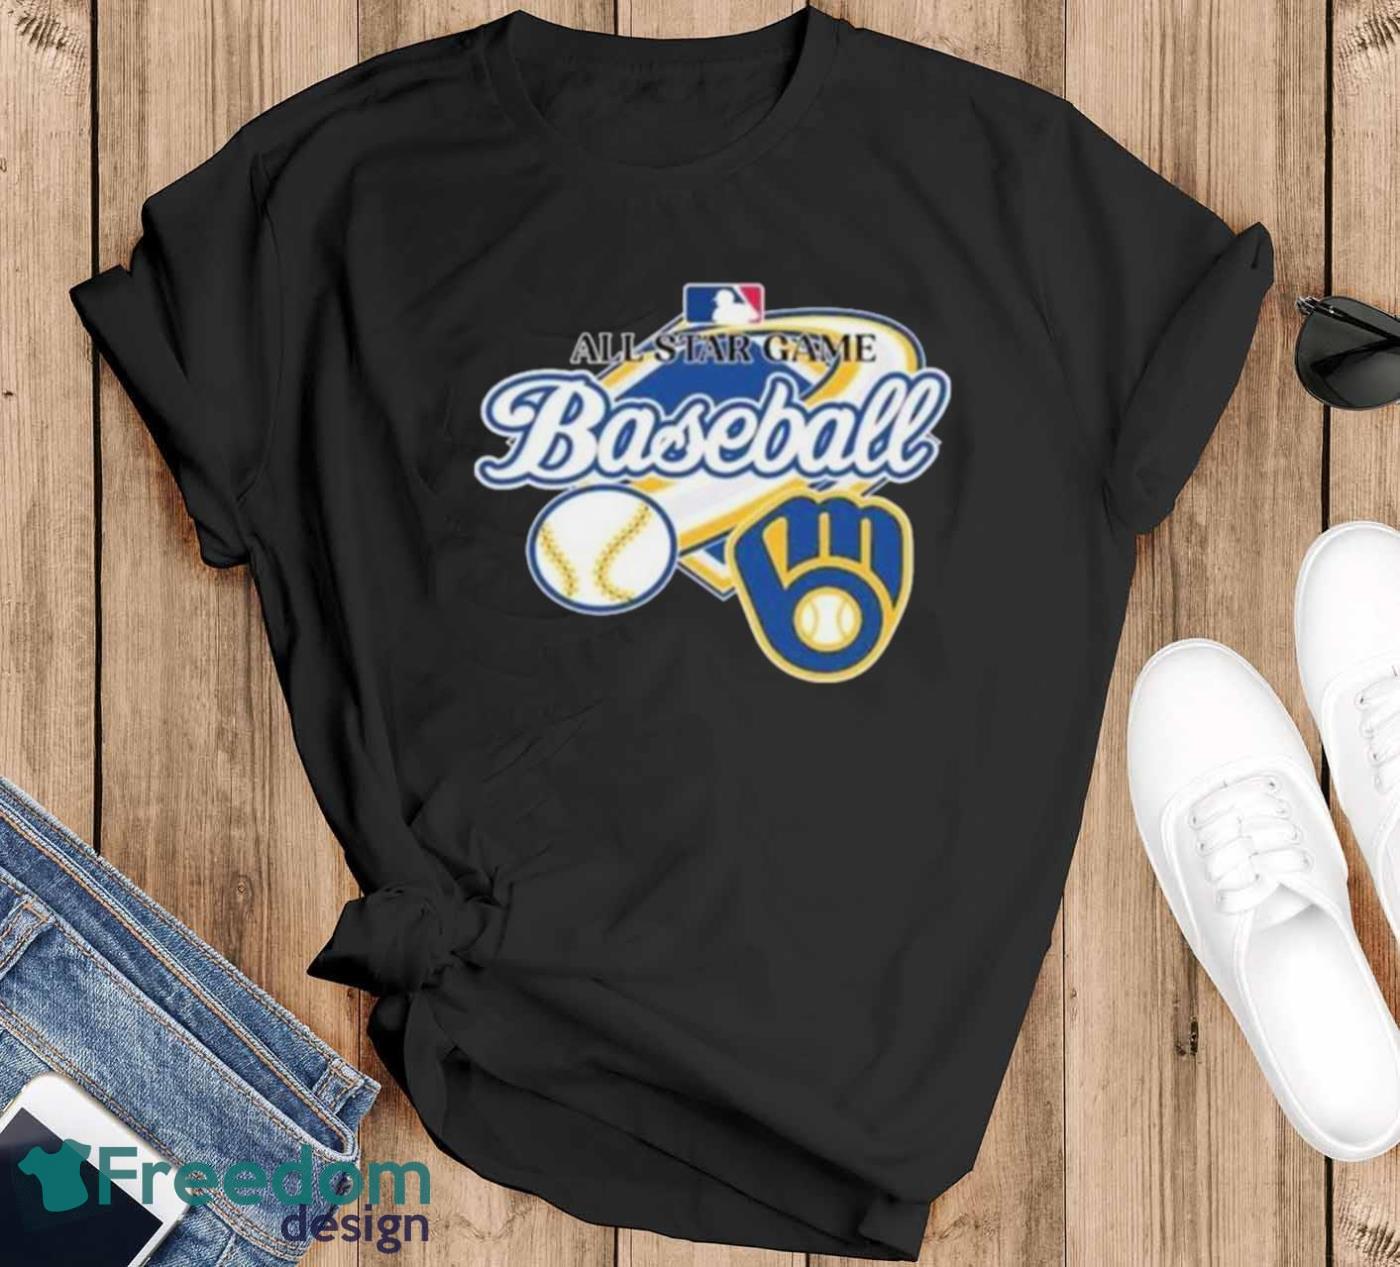 MLB World Tour Milwaukee Brewers logo T-shirt, hoodie, sweater